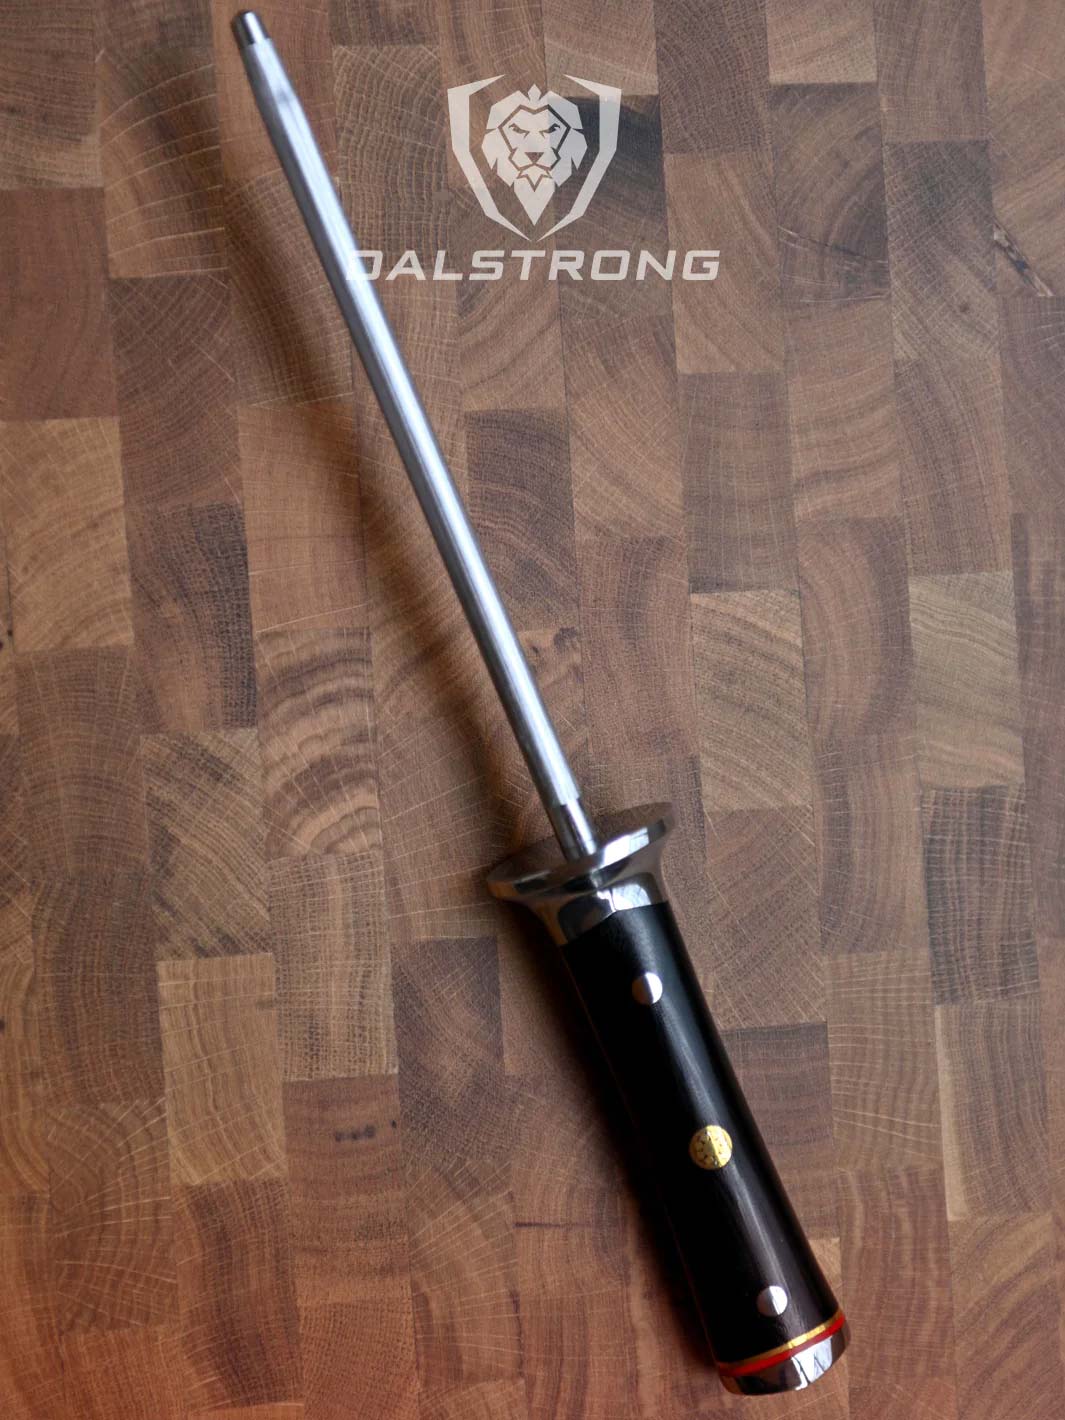 Dalstrong Honing Rod - 8 inch - Centurion Series - Premium Swedish 14C28N High Carbon Stainless Steel - G10 Handle - Razor Sharp Kitchen Knife